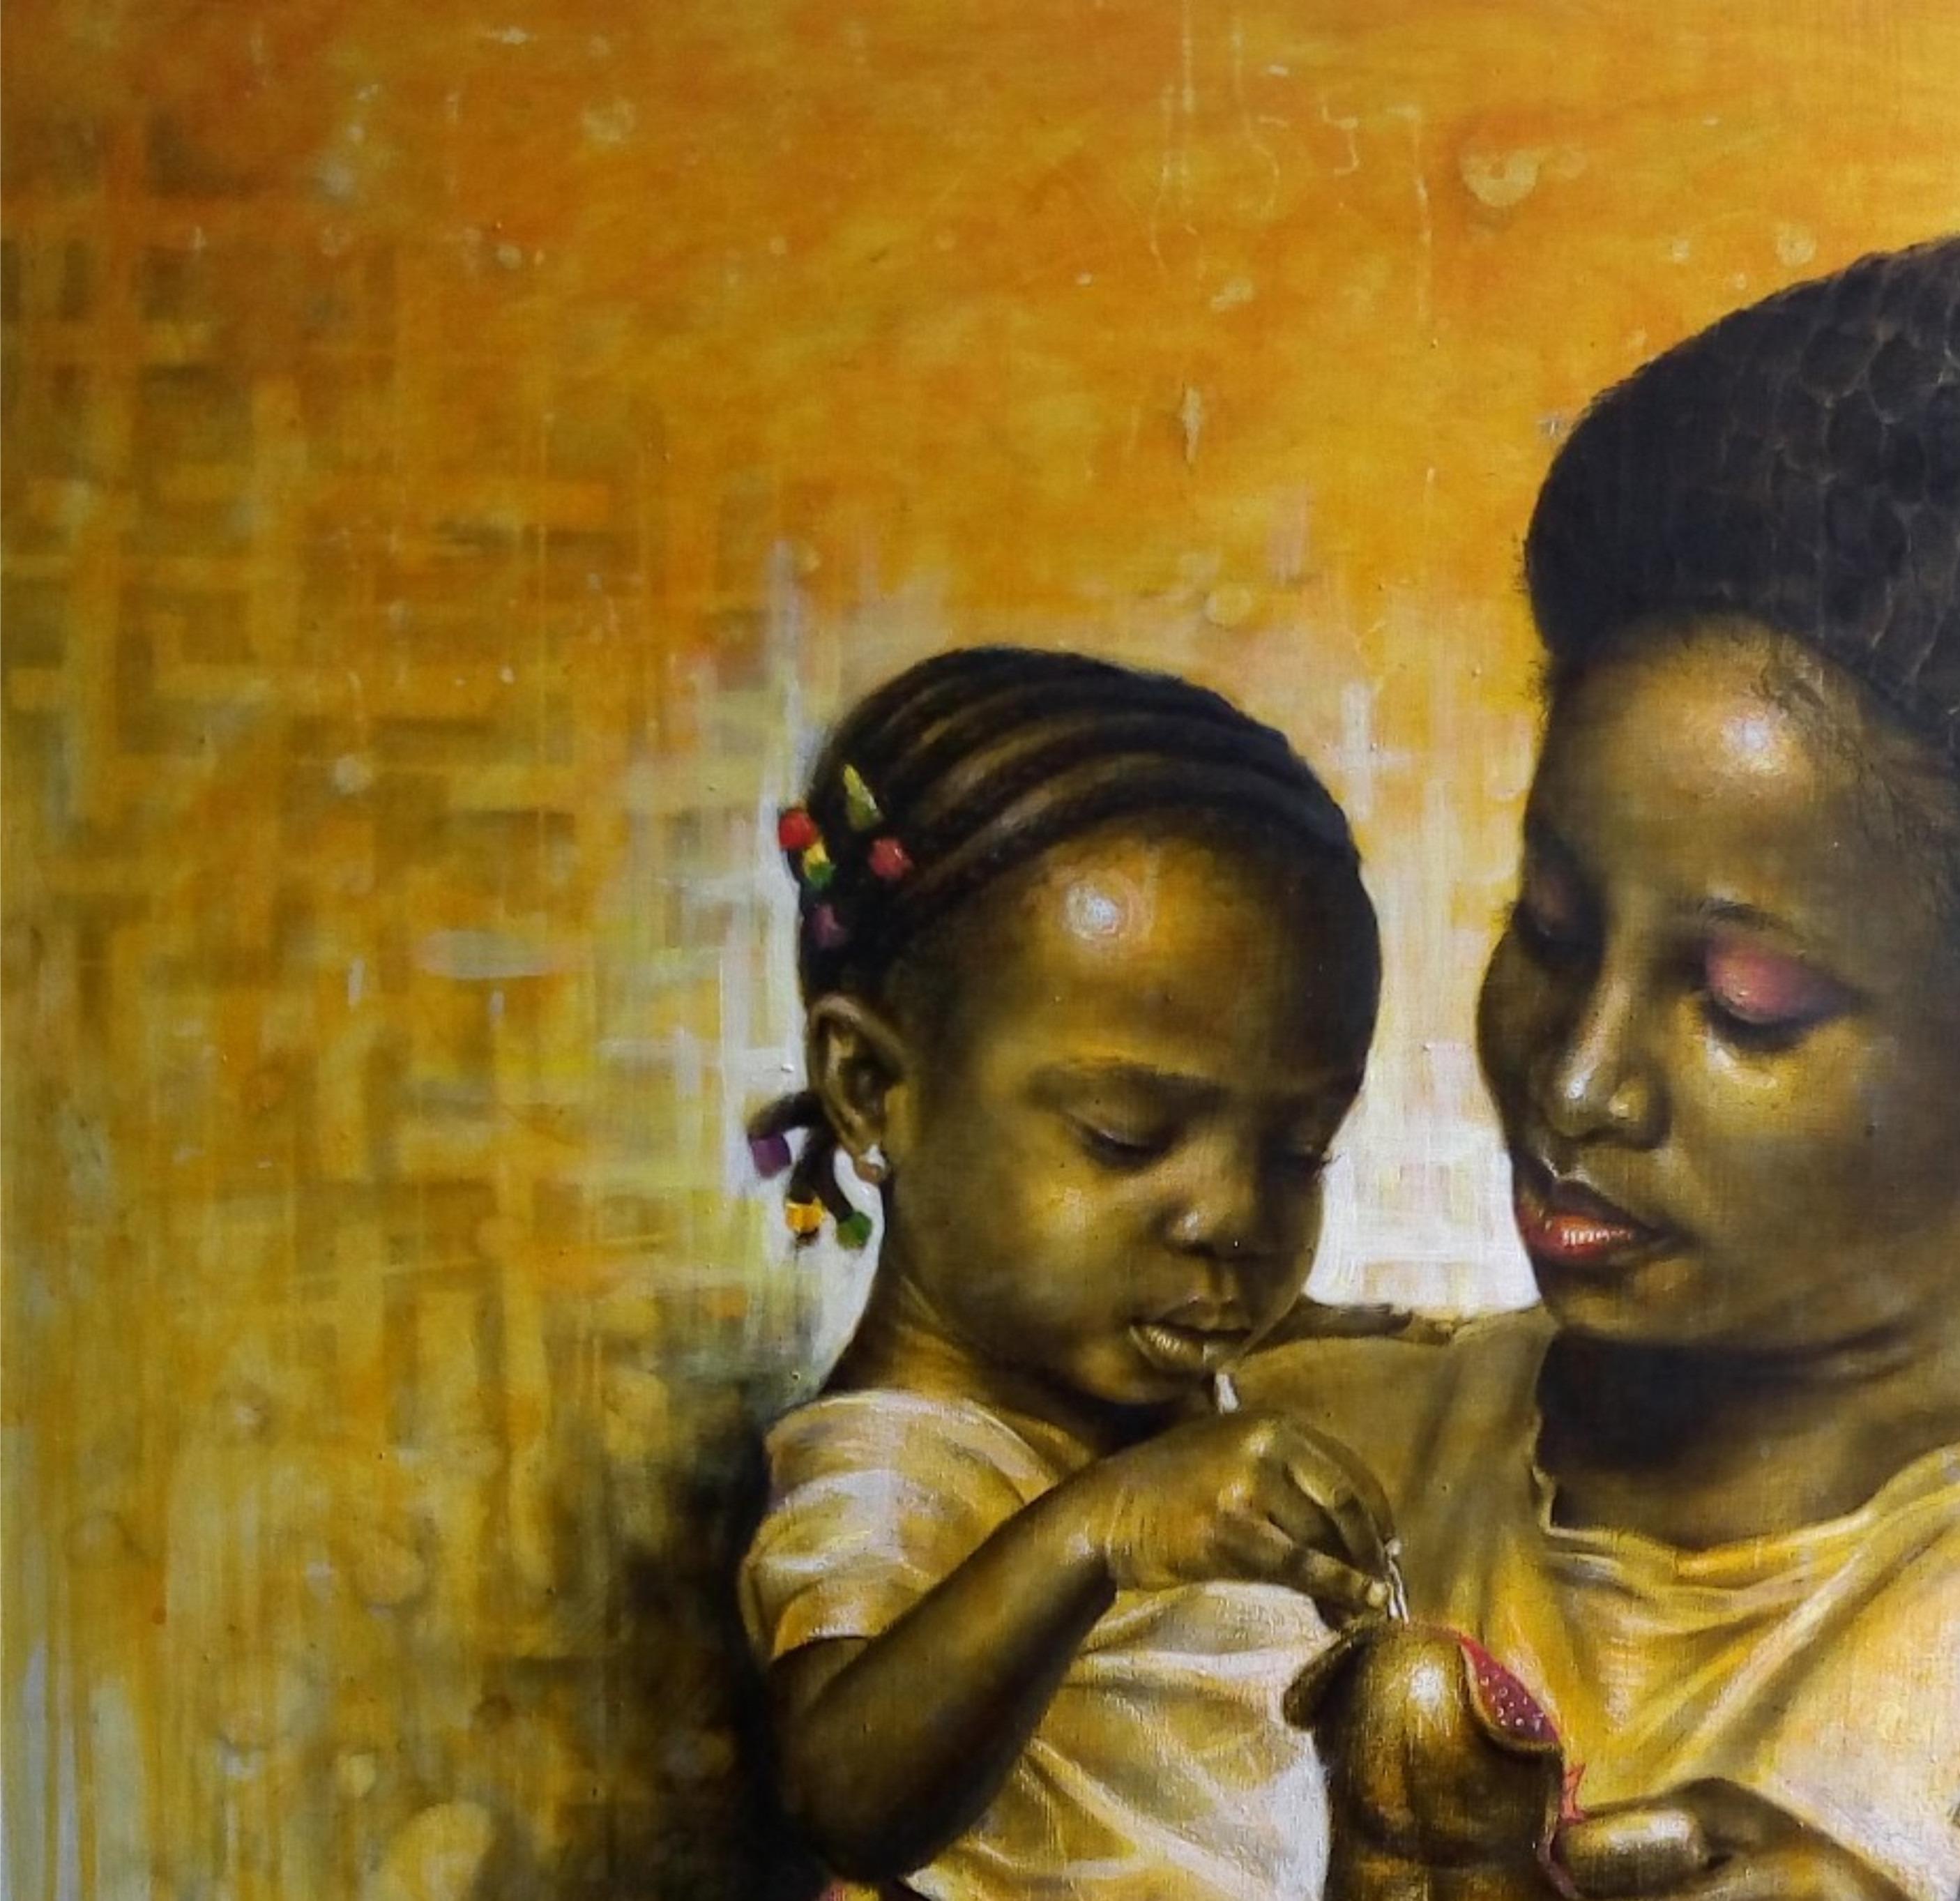 Herausragender Freund – Painting von Oluwaseun Ojebiyi